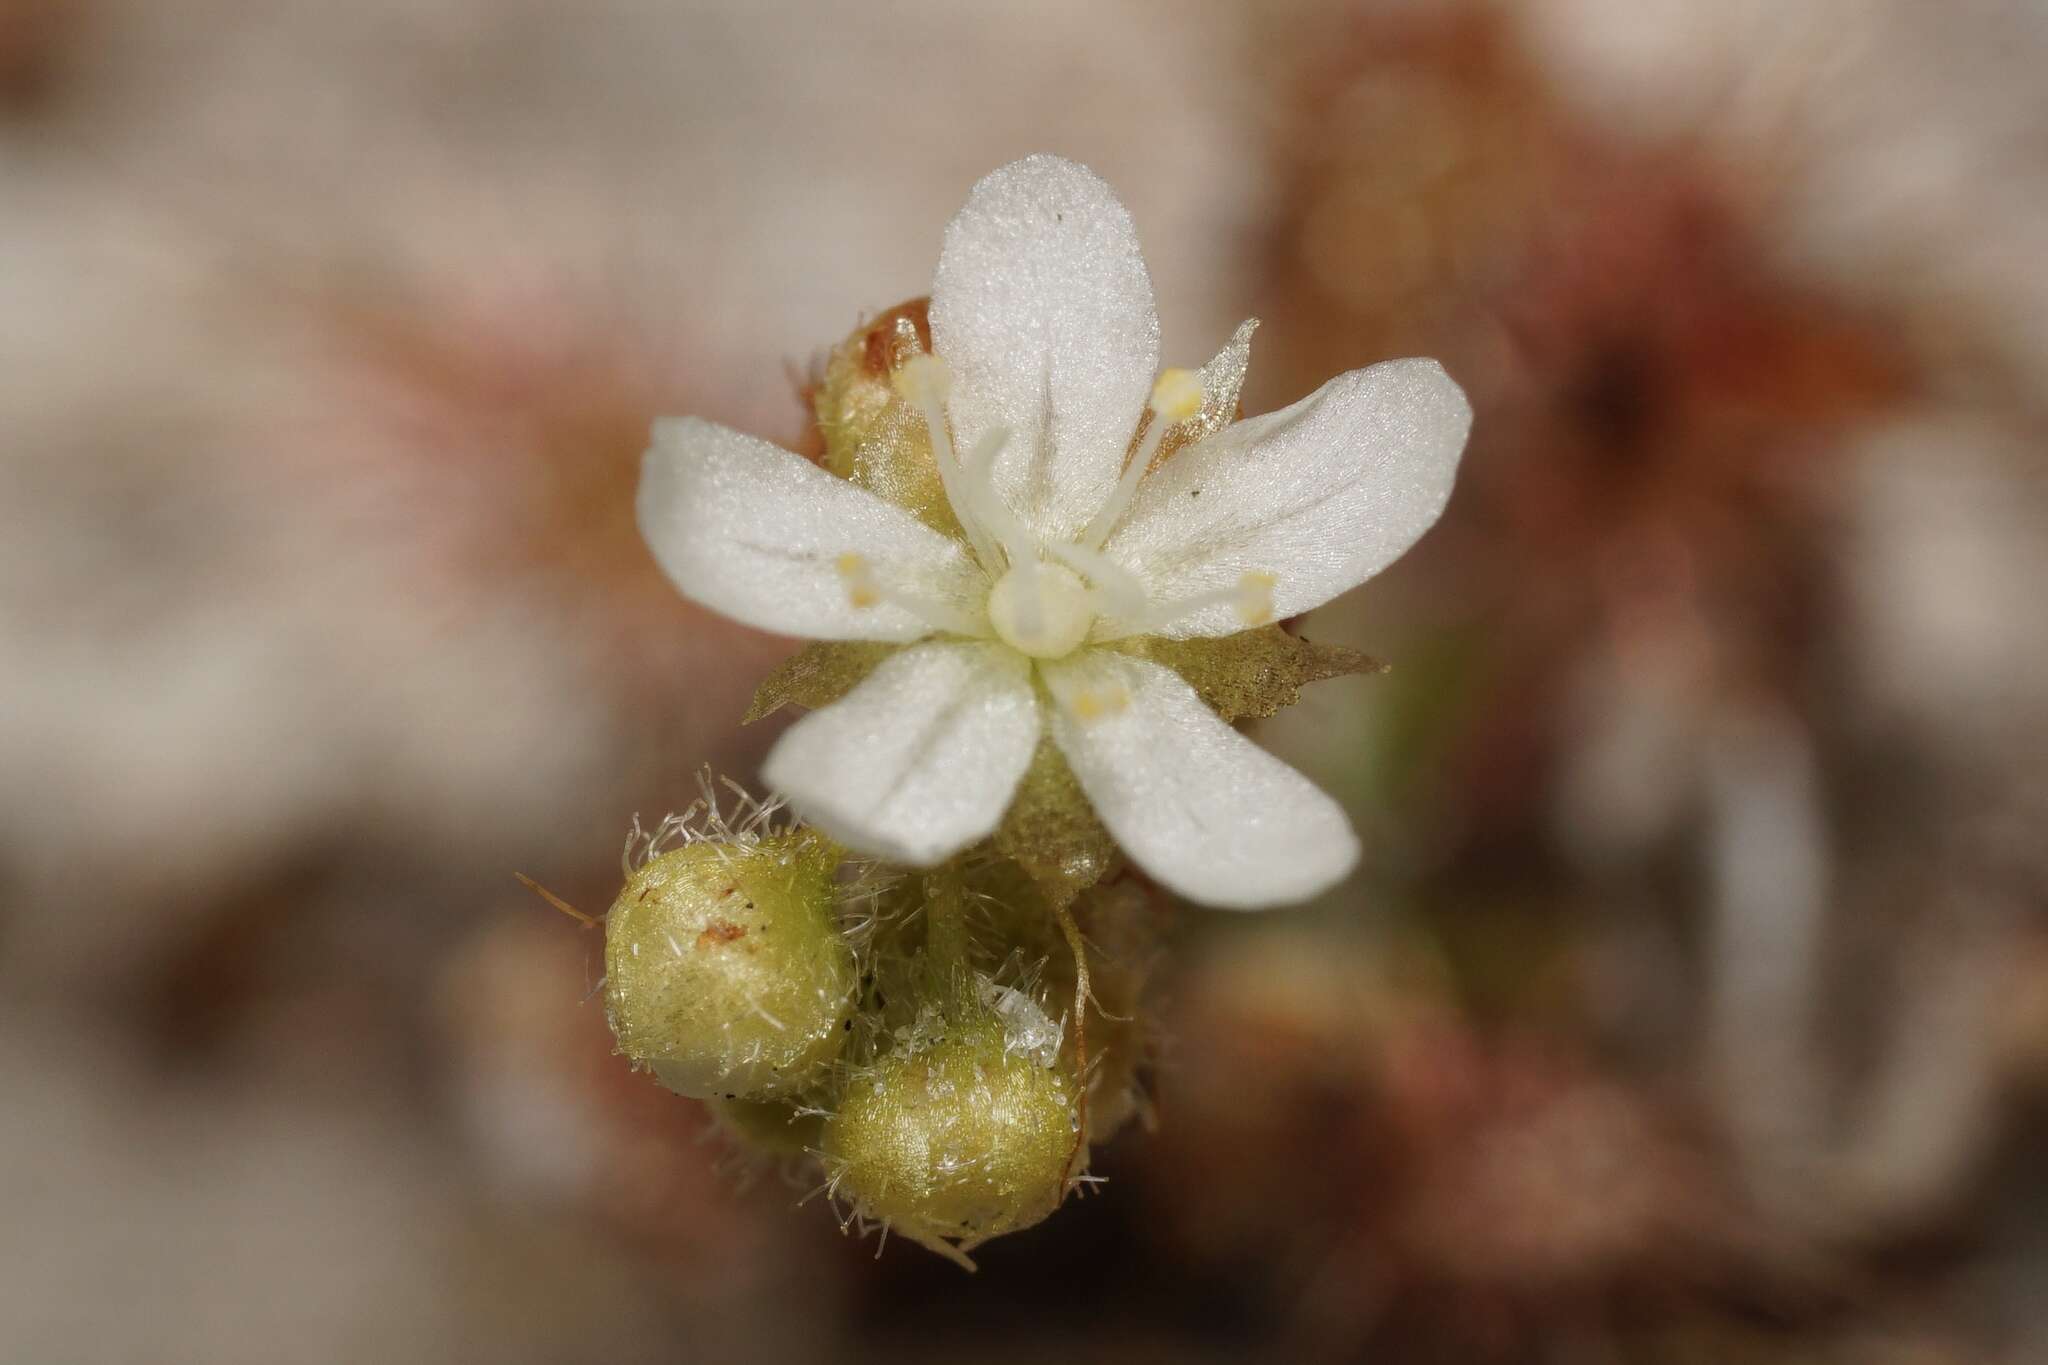 Image of Drosera paleacea subsp. roseana (N. Marchant & Lowrie) Schlauer